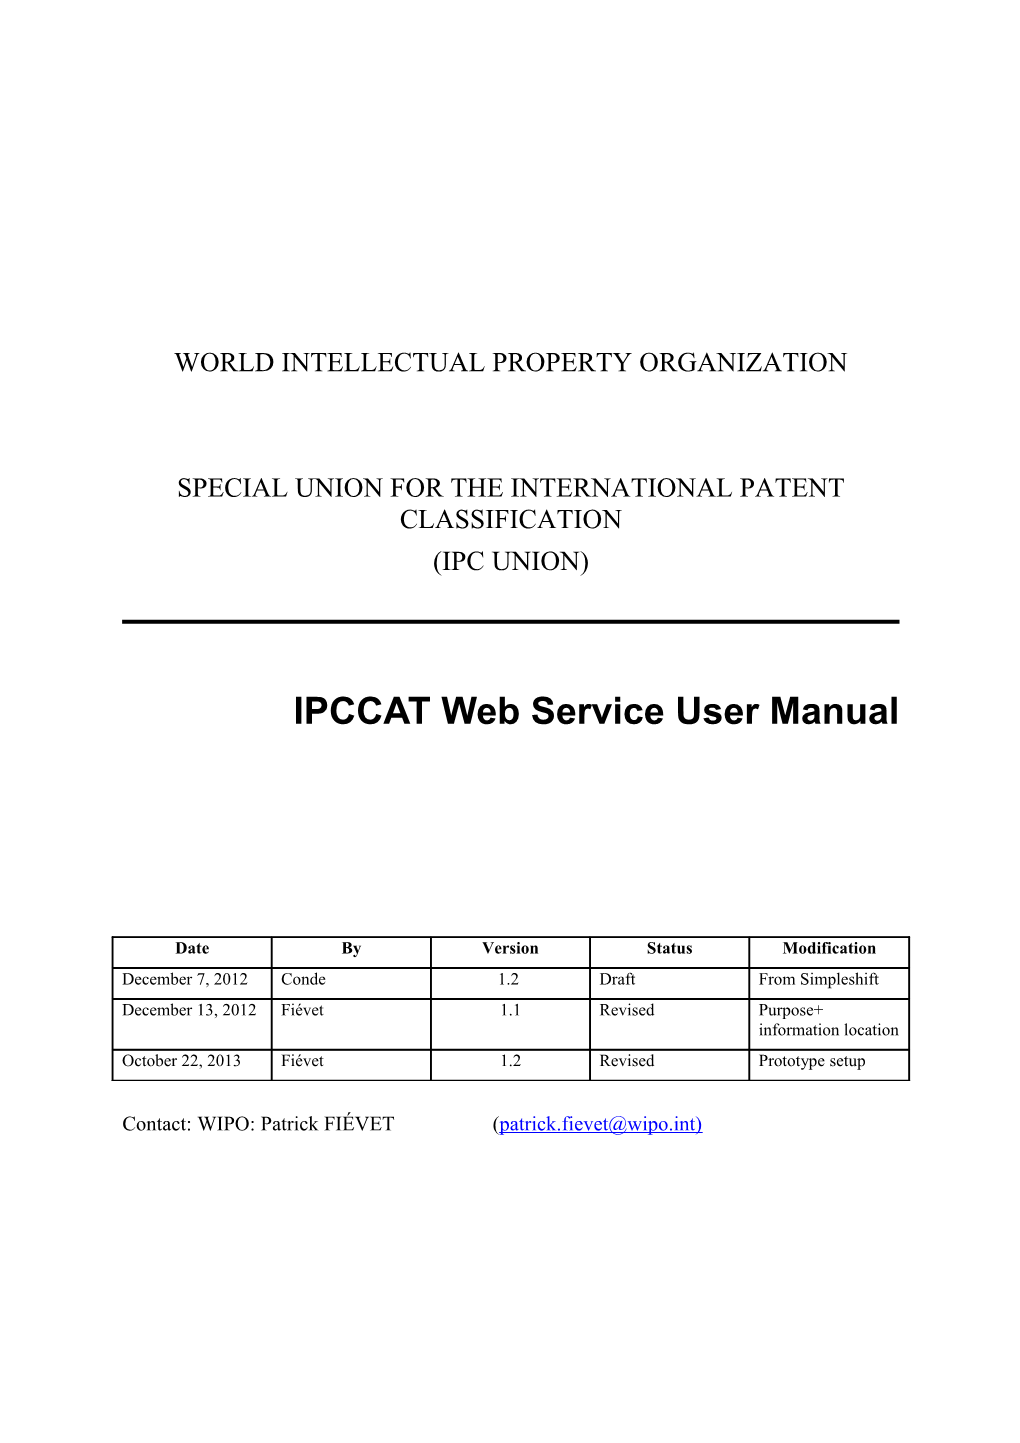 IPCCAT Web Service User Manual